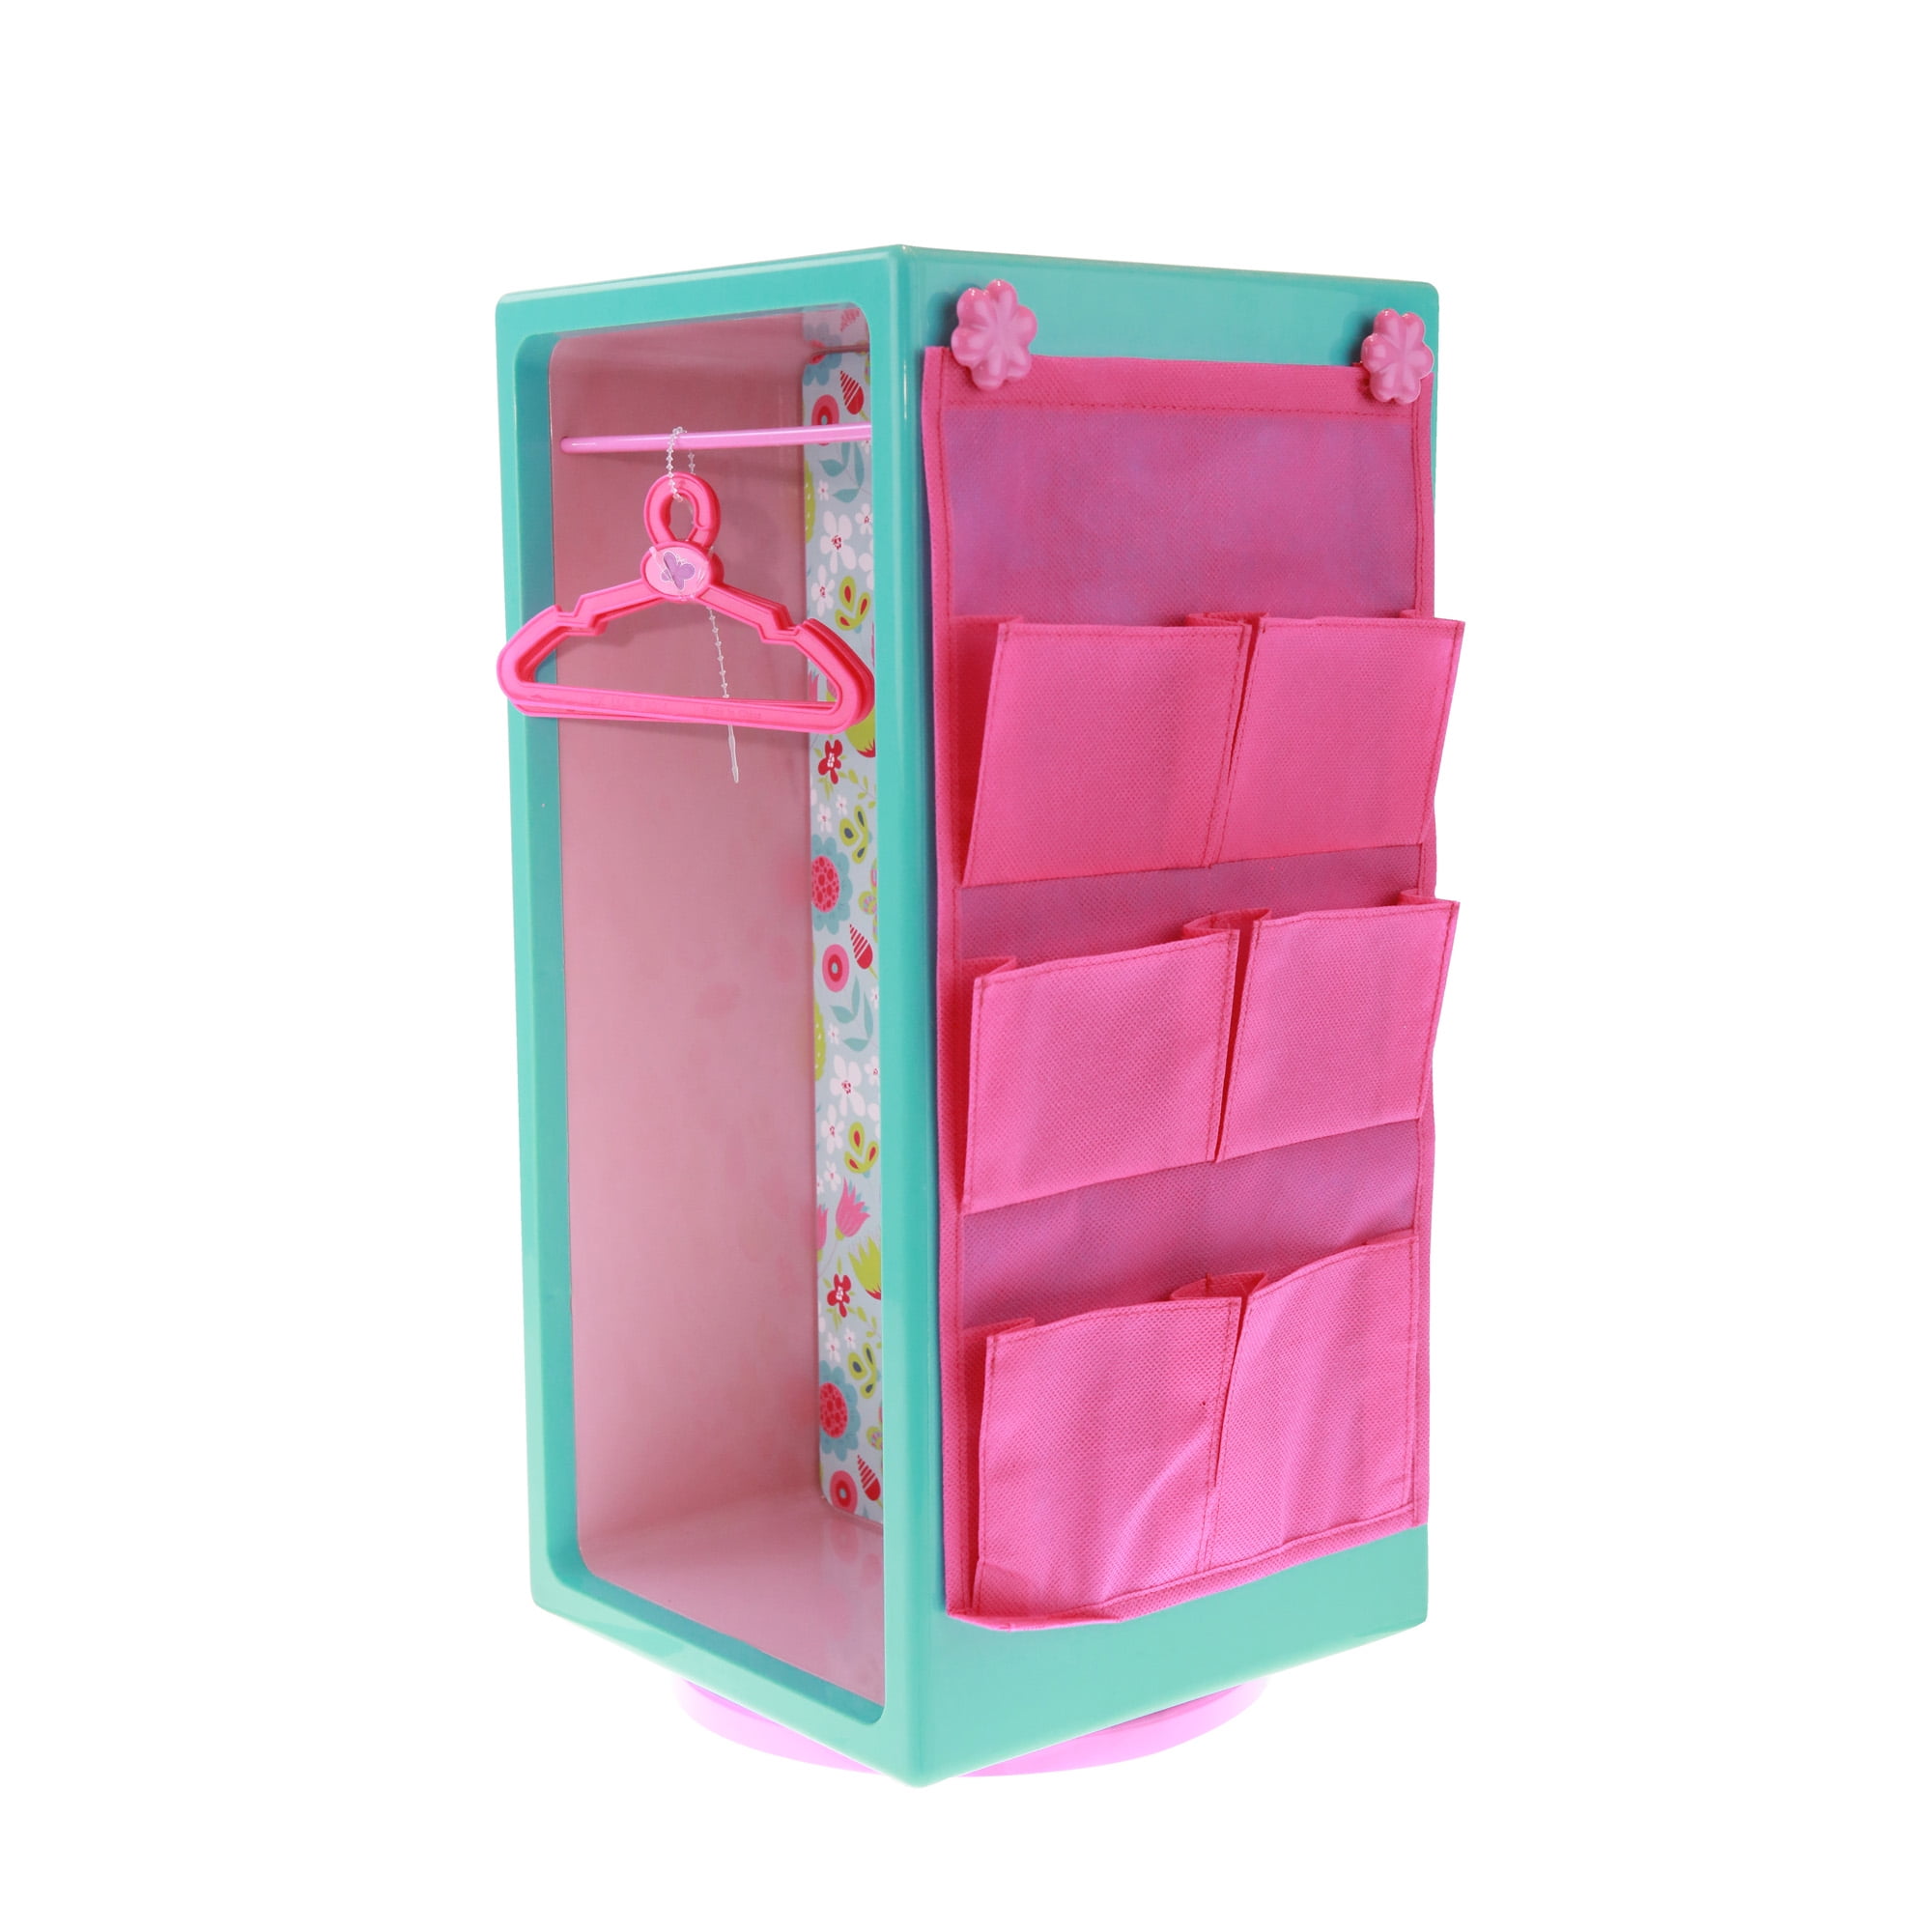 Barbie Dreamhouse - Walmart.com | Barbie accessories that ...